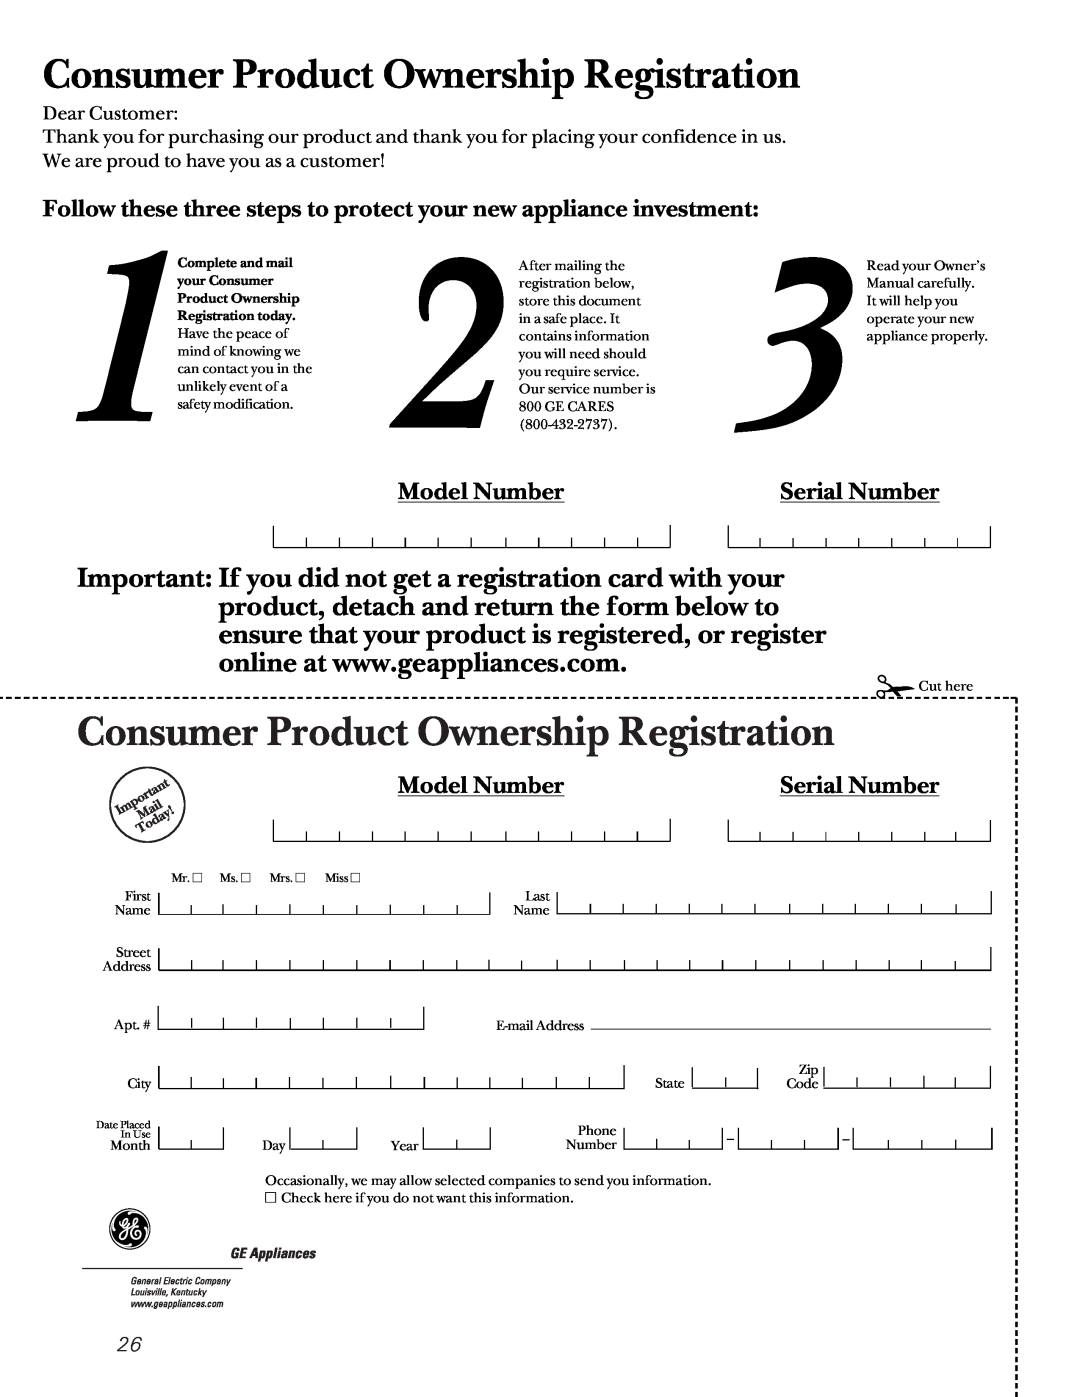 GE 49-60080 7-00 JR, 162D7744P009 Model Number, Serial Number, Dear Customer, Consumer Product Ownership Registration 